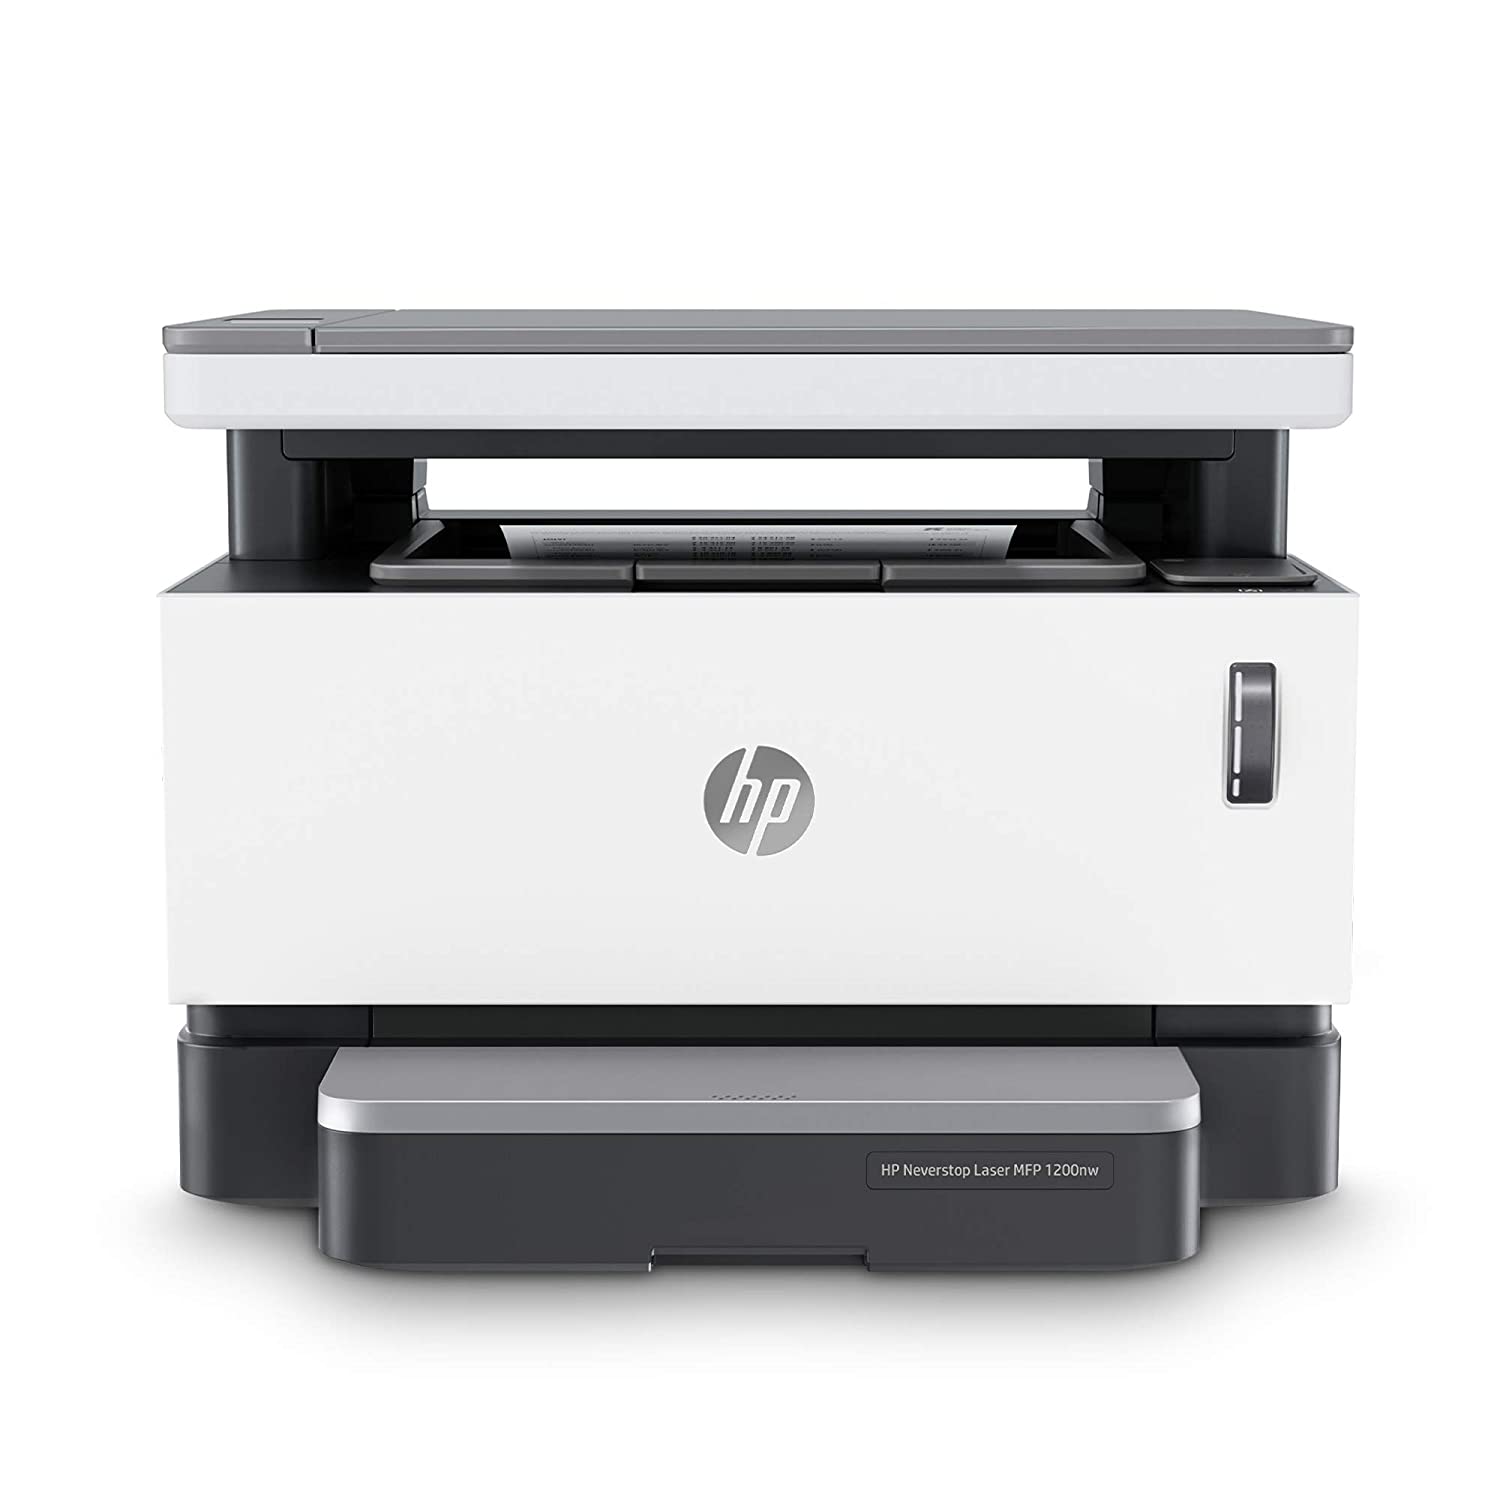 HP Neverstop Laser MFP 1200nw Printer:IN